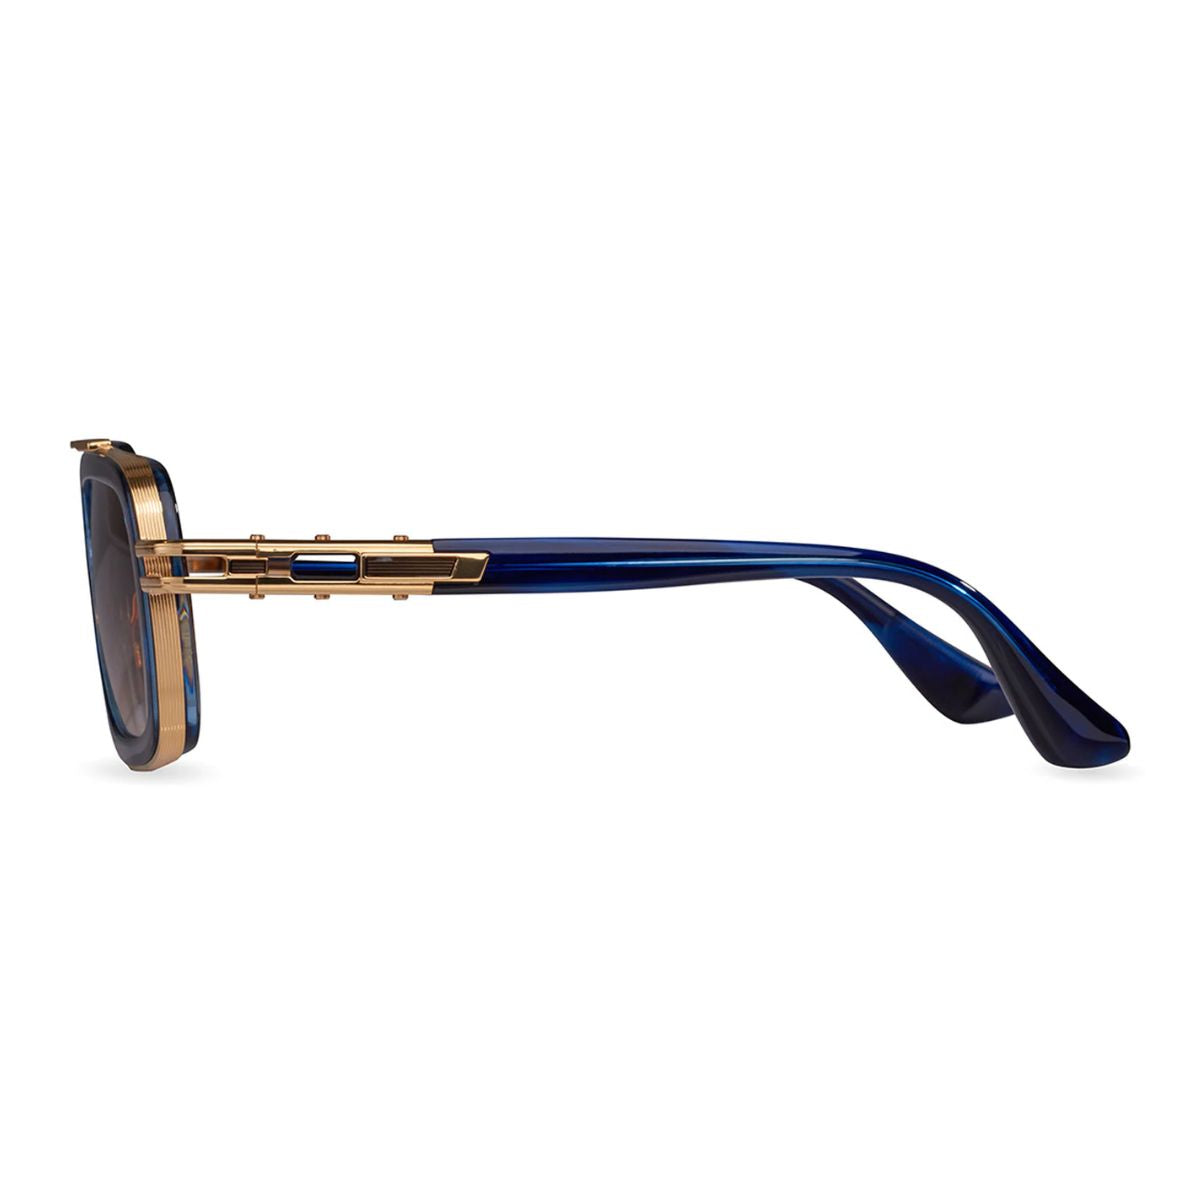 "Shop Trending Dita LXN-EVO Anti-Reflection Sunglasses Available At Optorium"